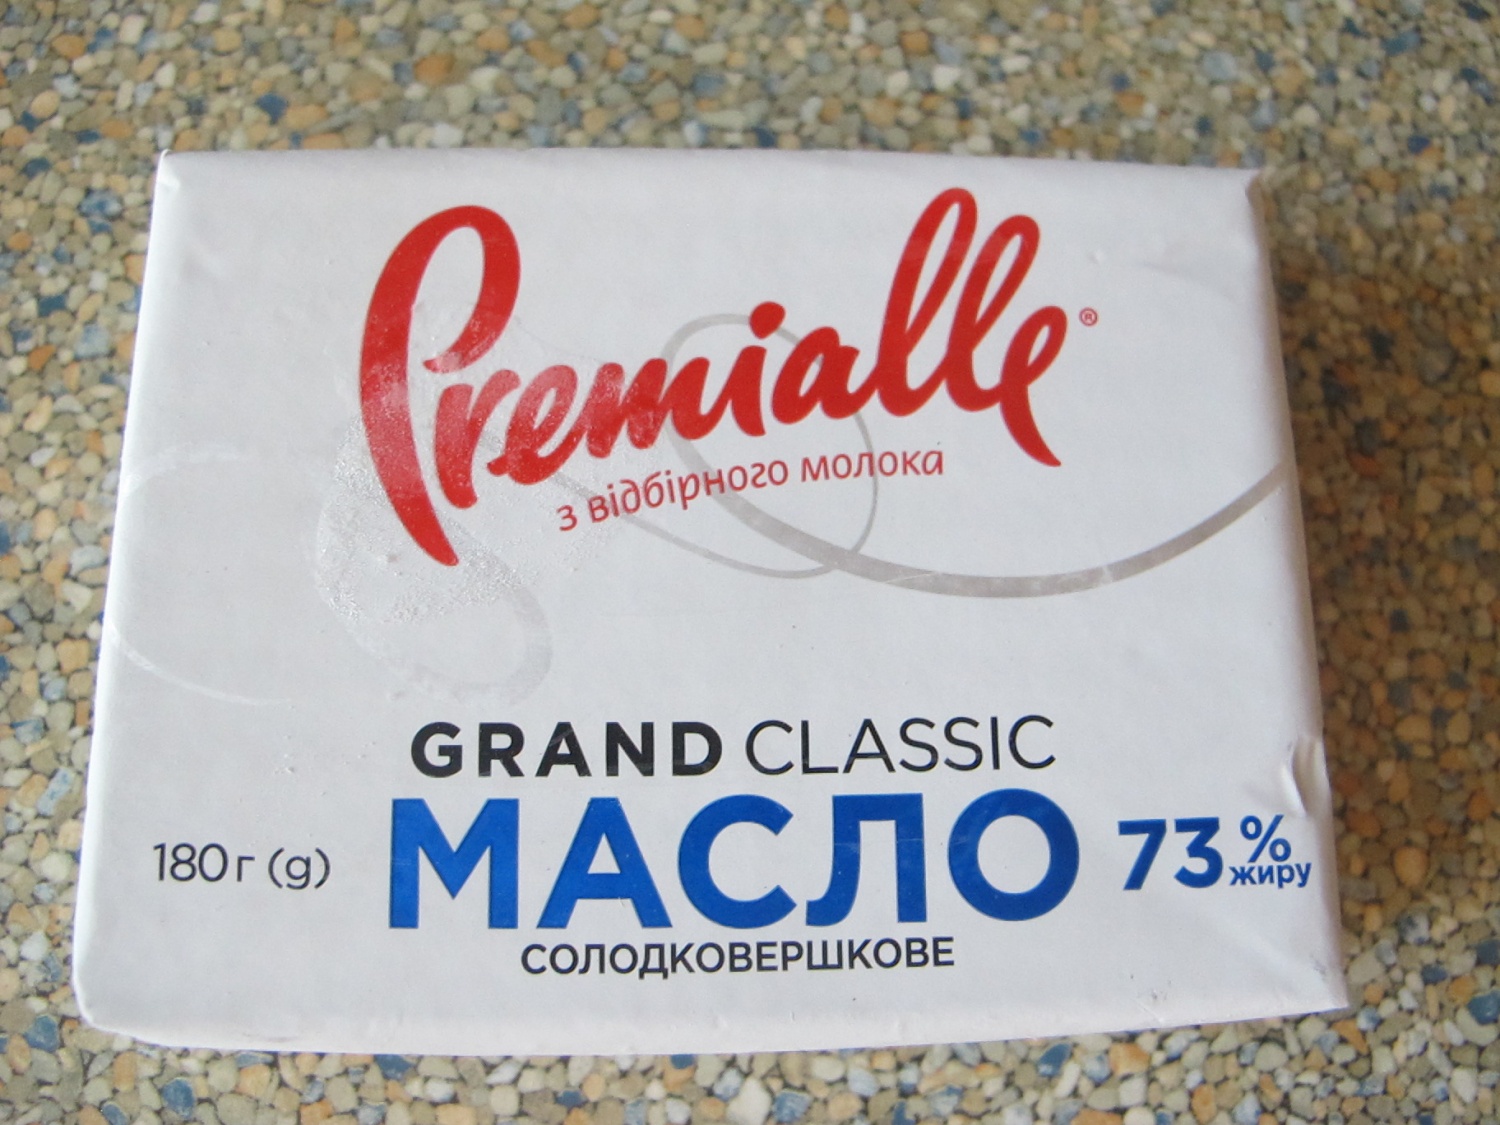 Масло сливочное Premialle Grand Classic 73% фото